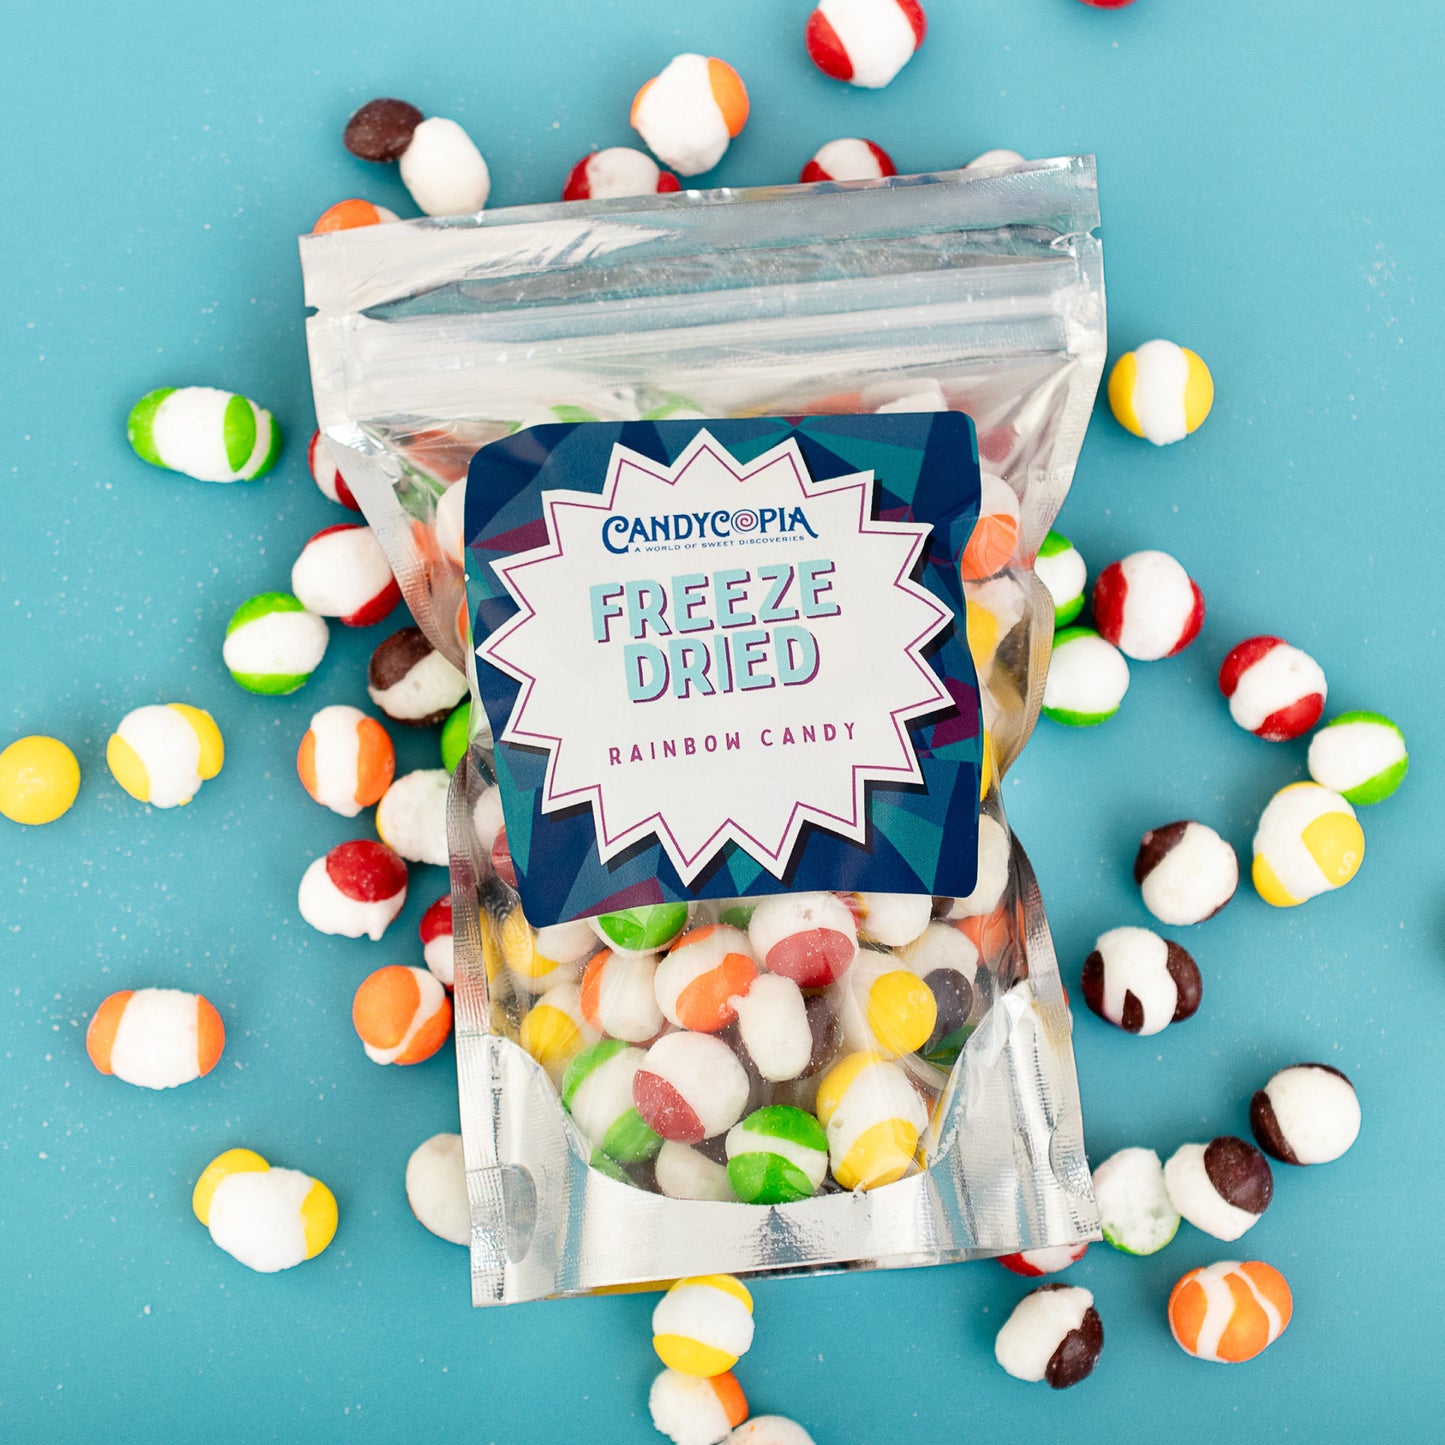 Candycopia - Freeze Dried Rainbow Candy: Original